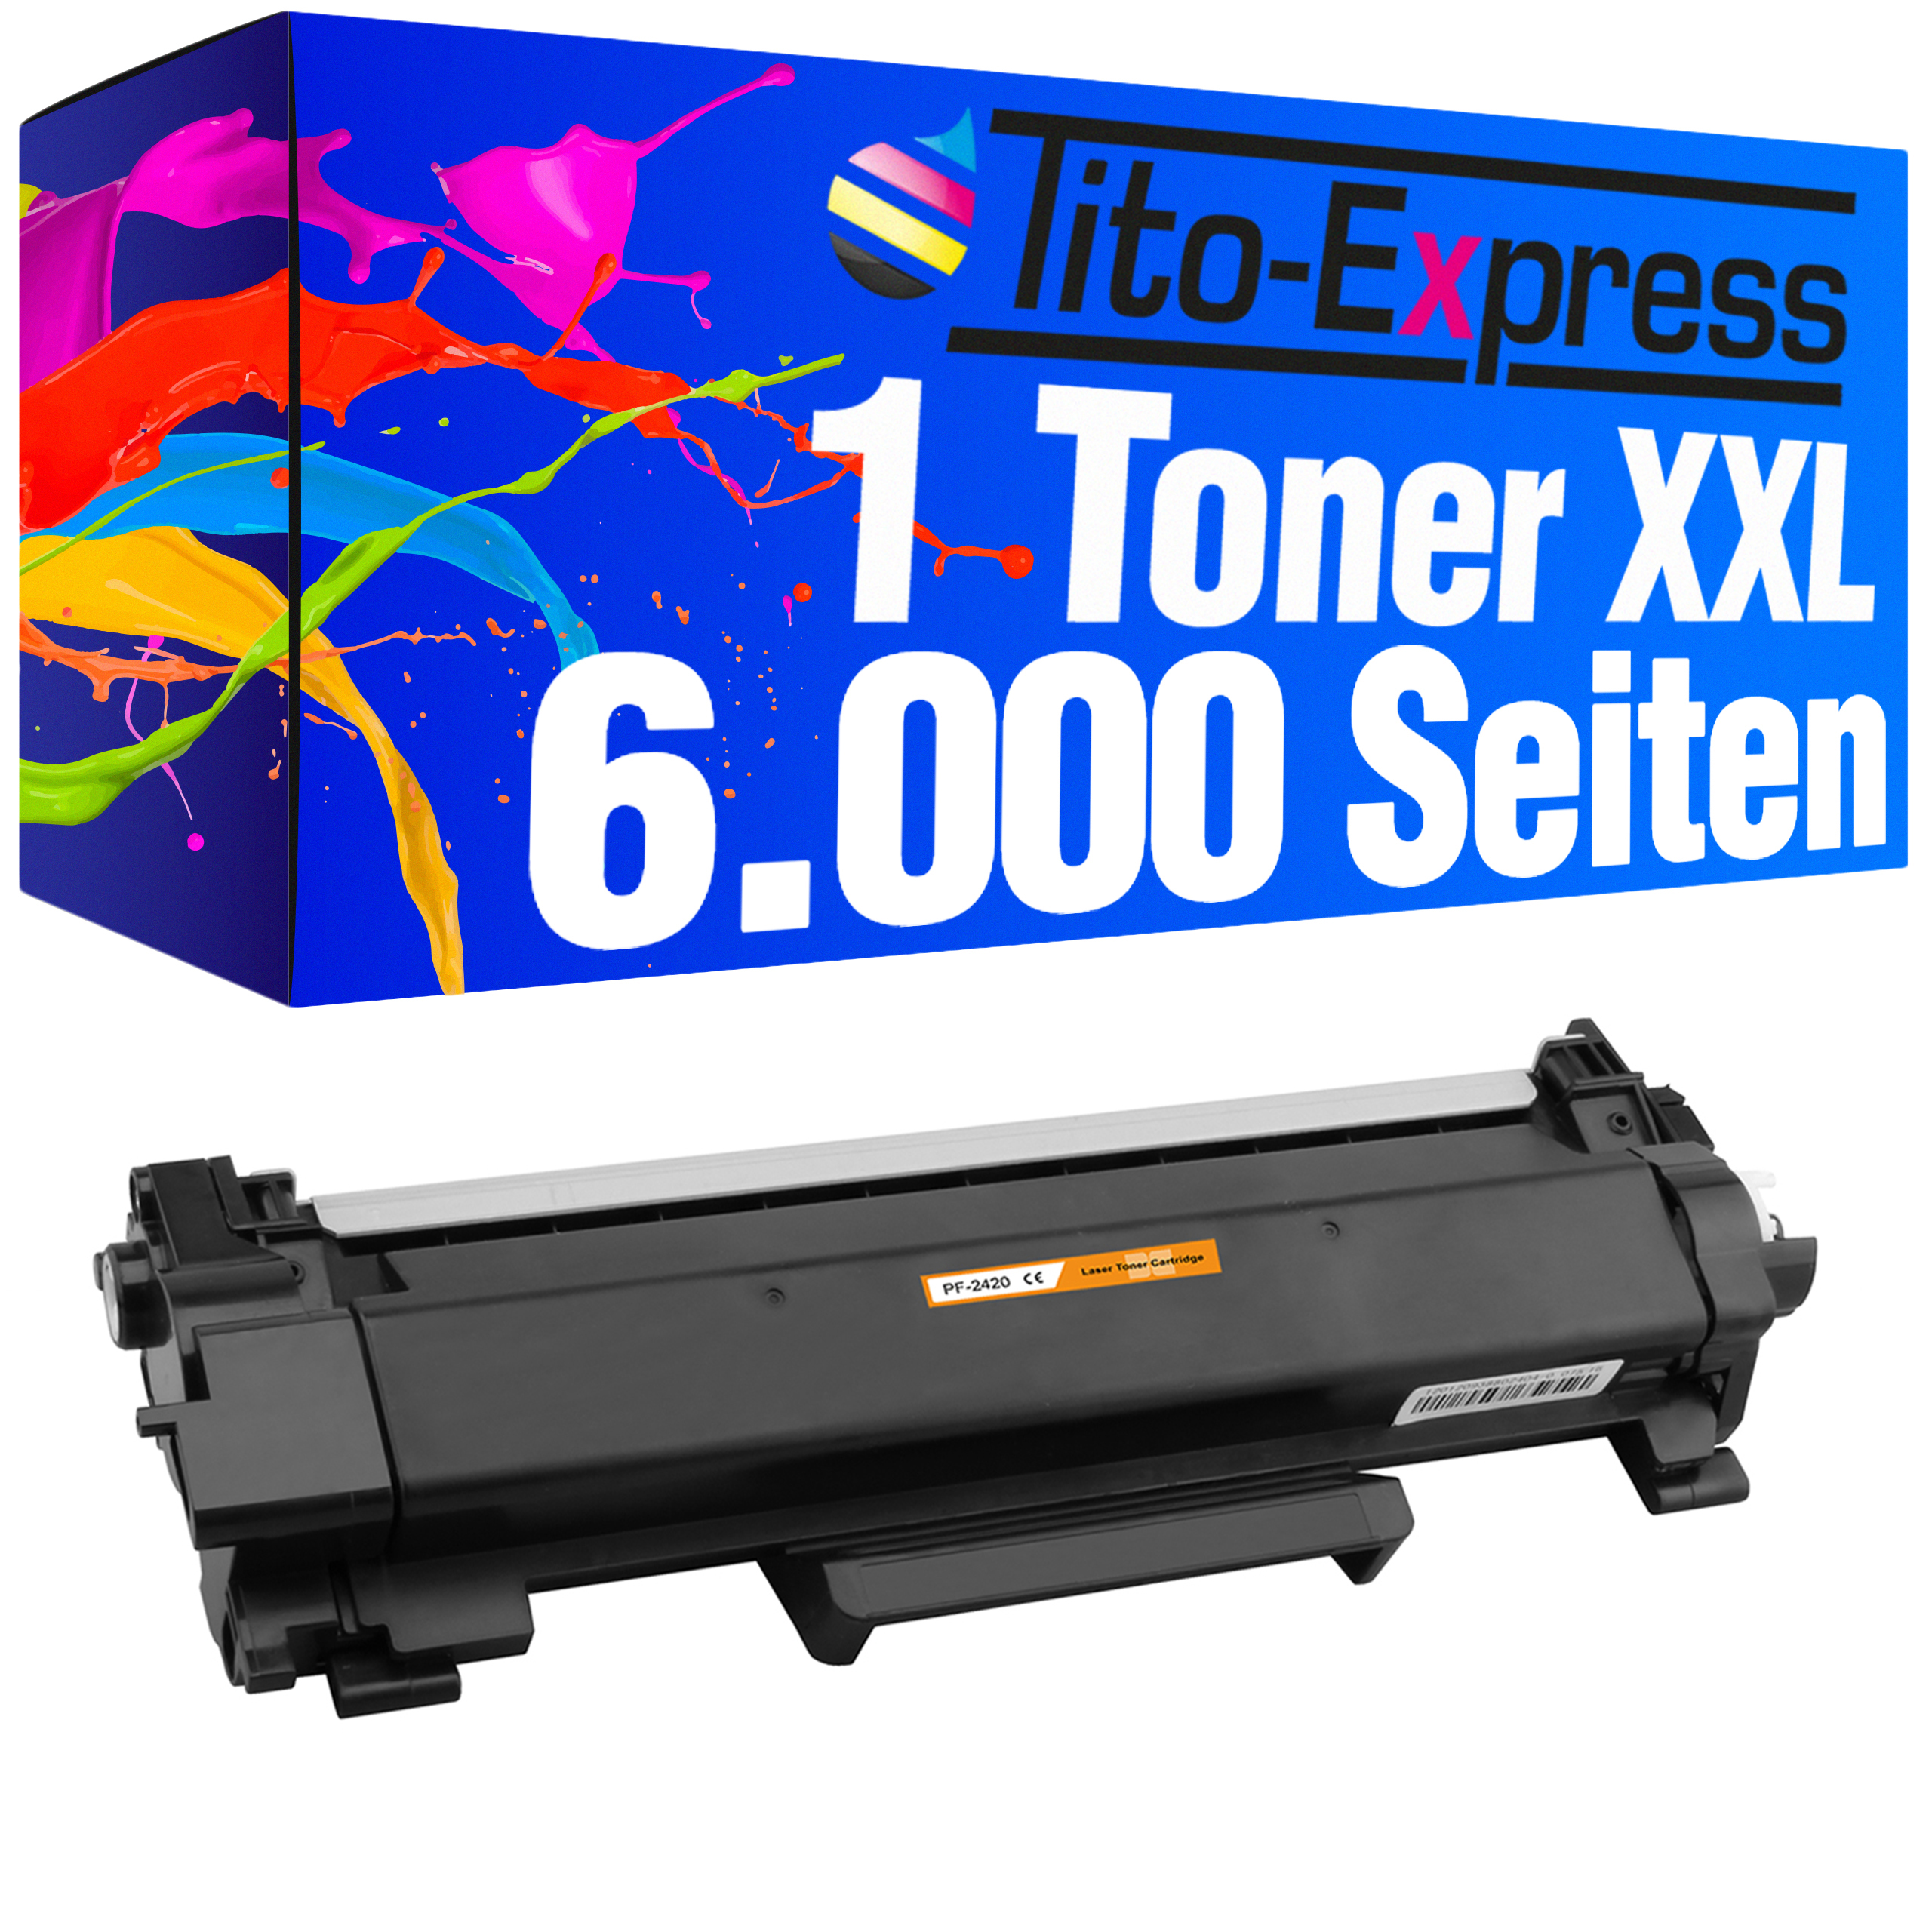 1 (TN-2420) Super-XL ersetzt Brother Toner TITO-EXPRESS Black TN-2420 PLATINUMSERIE Toner